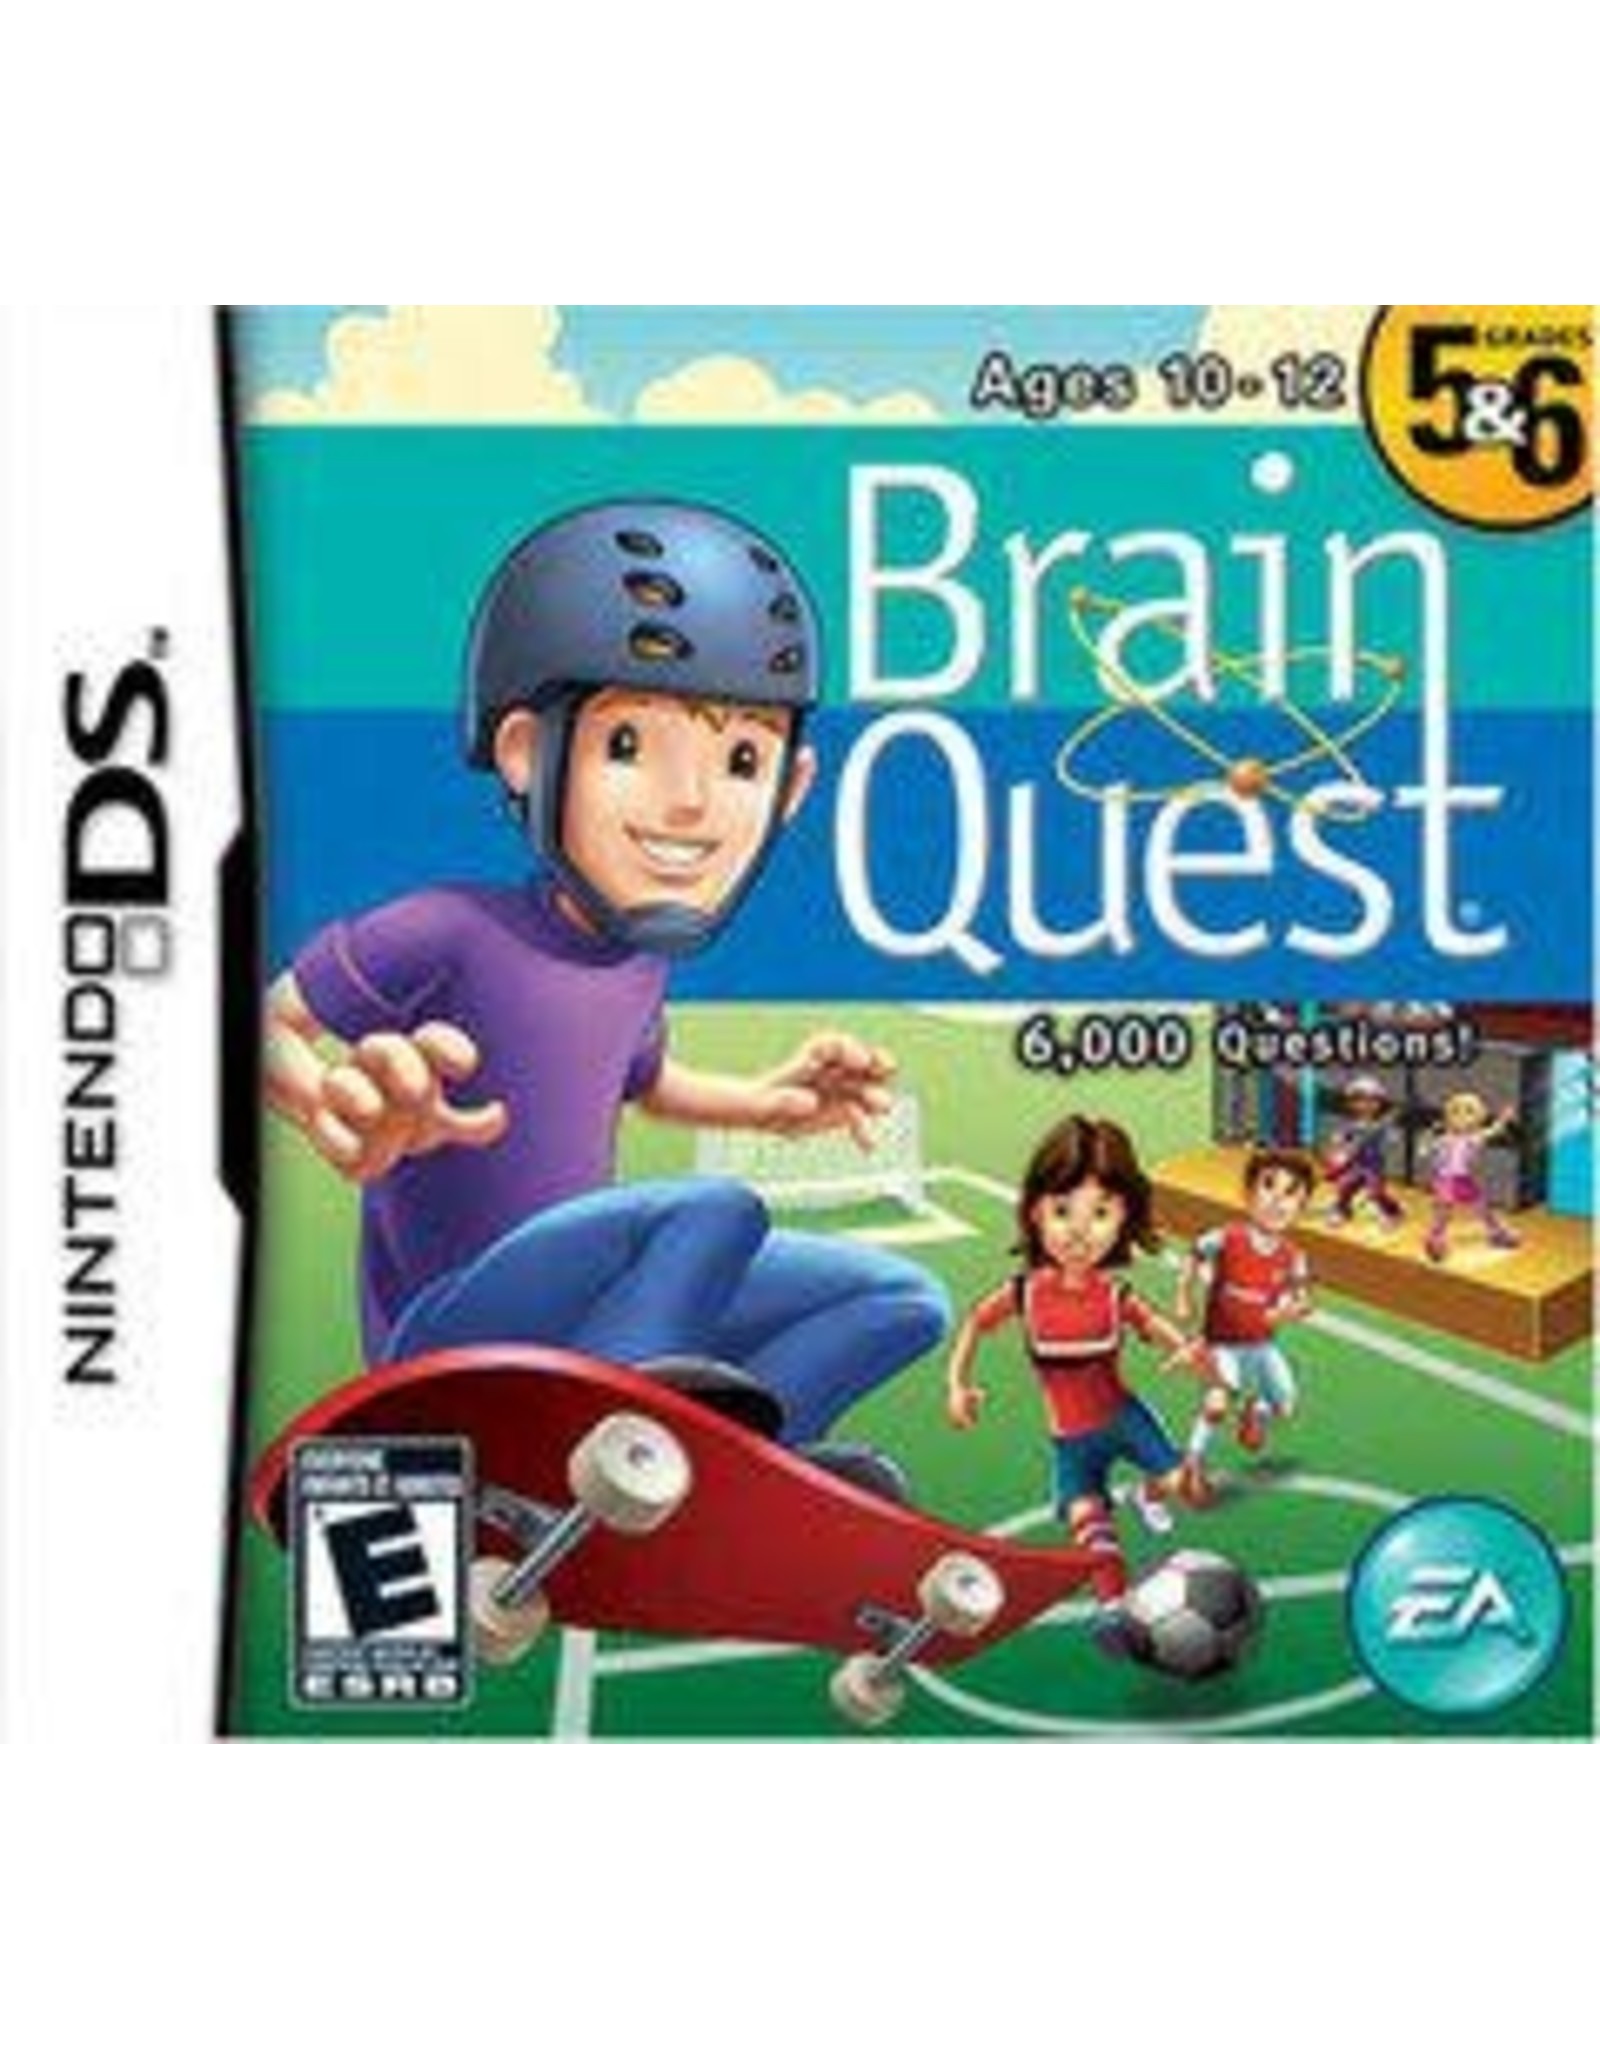 Nintendo DS Brain Quest Grades 5 & 6 (Cart Only)